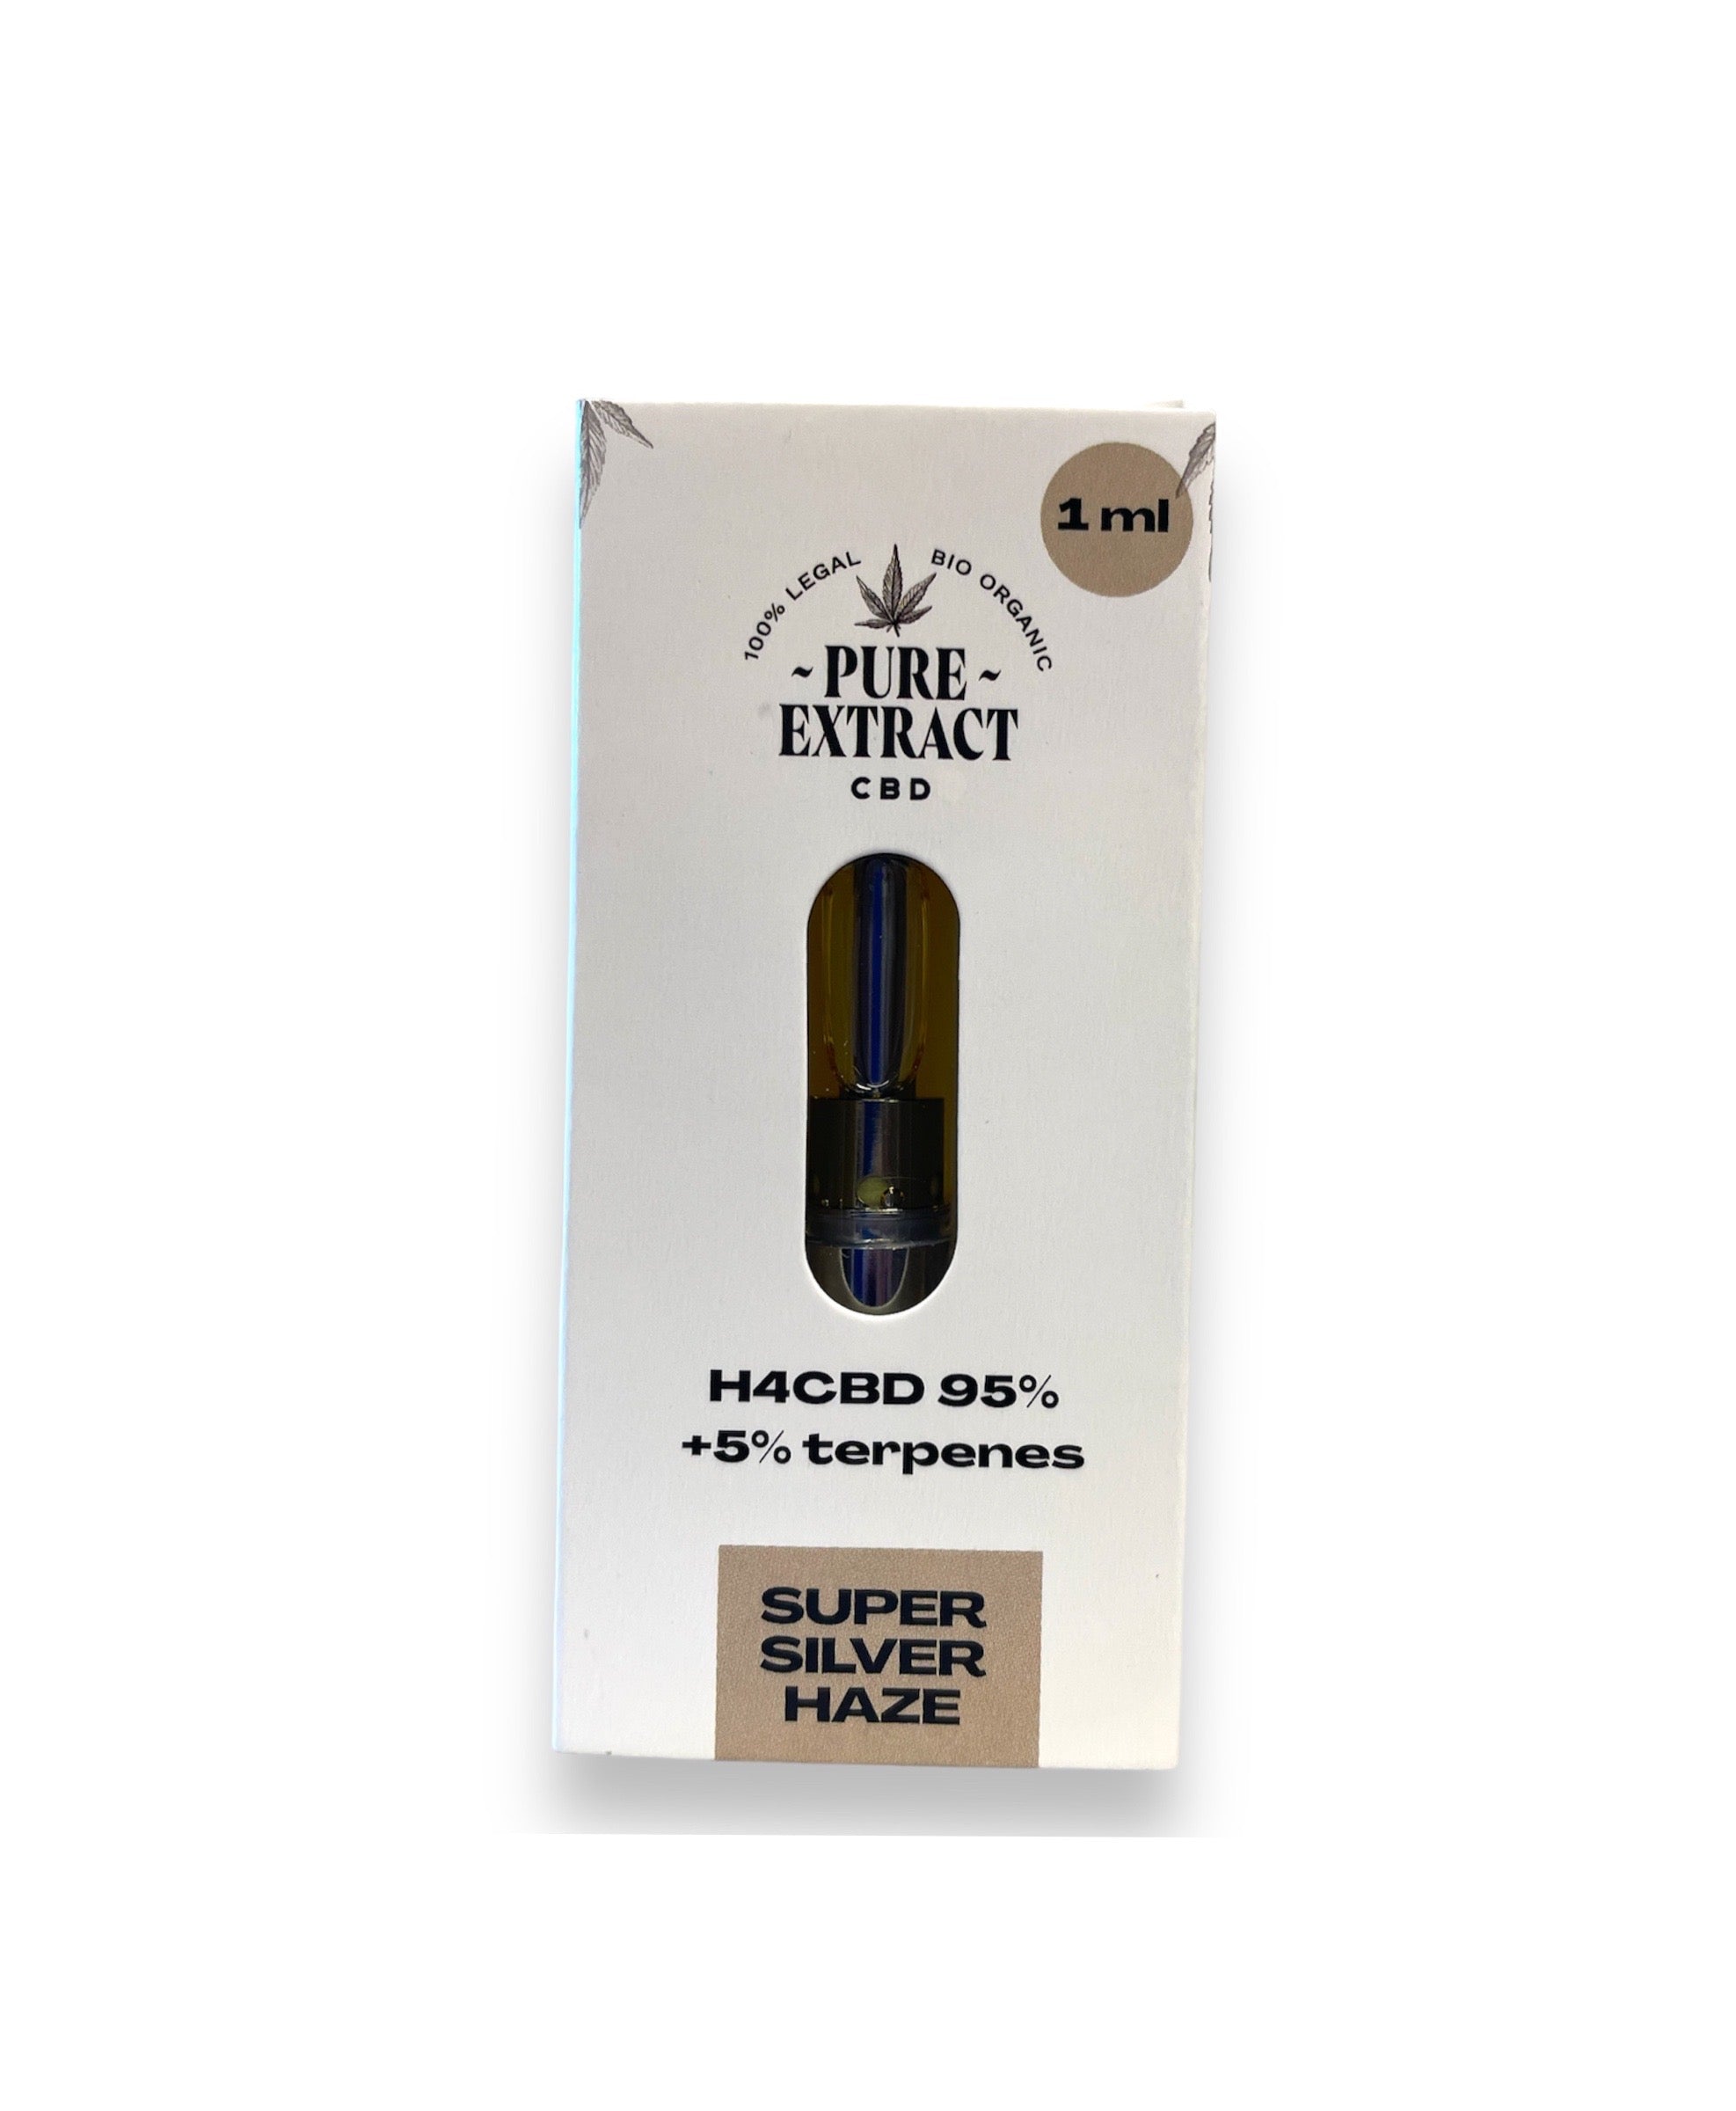 Pure Extract CBD Cartridge (Dab Pen) by H4CBD - Super Silver Haze - 95% H4CBD - 1ML - 600 puffs